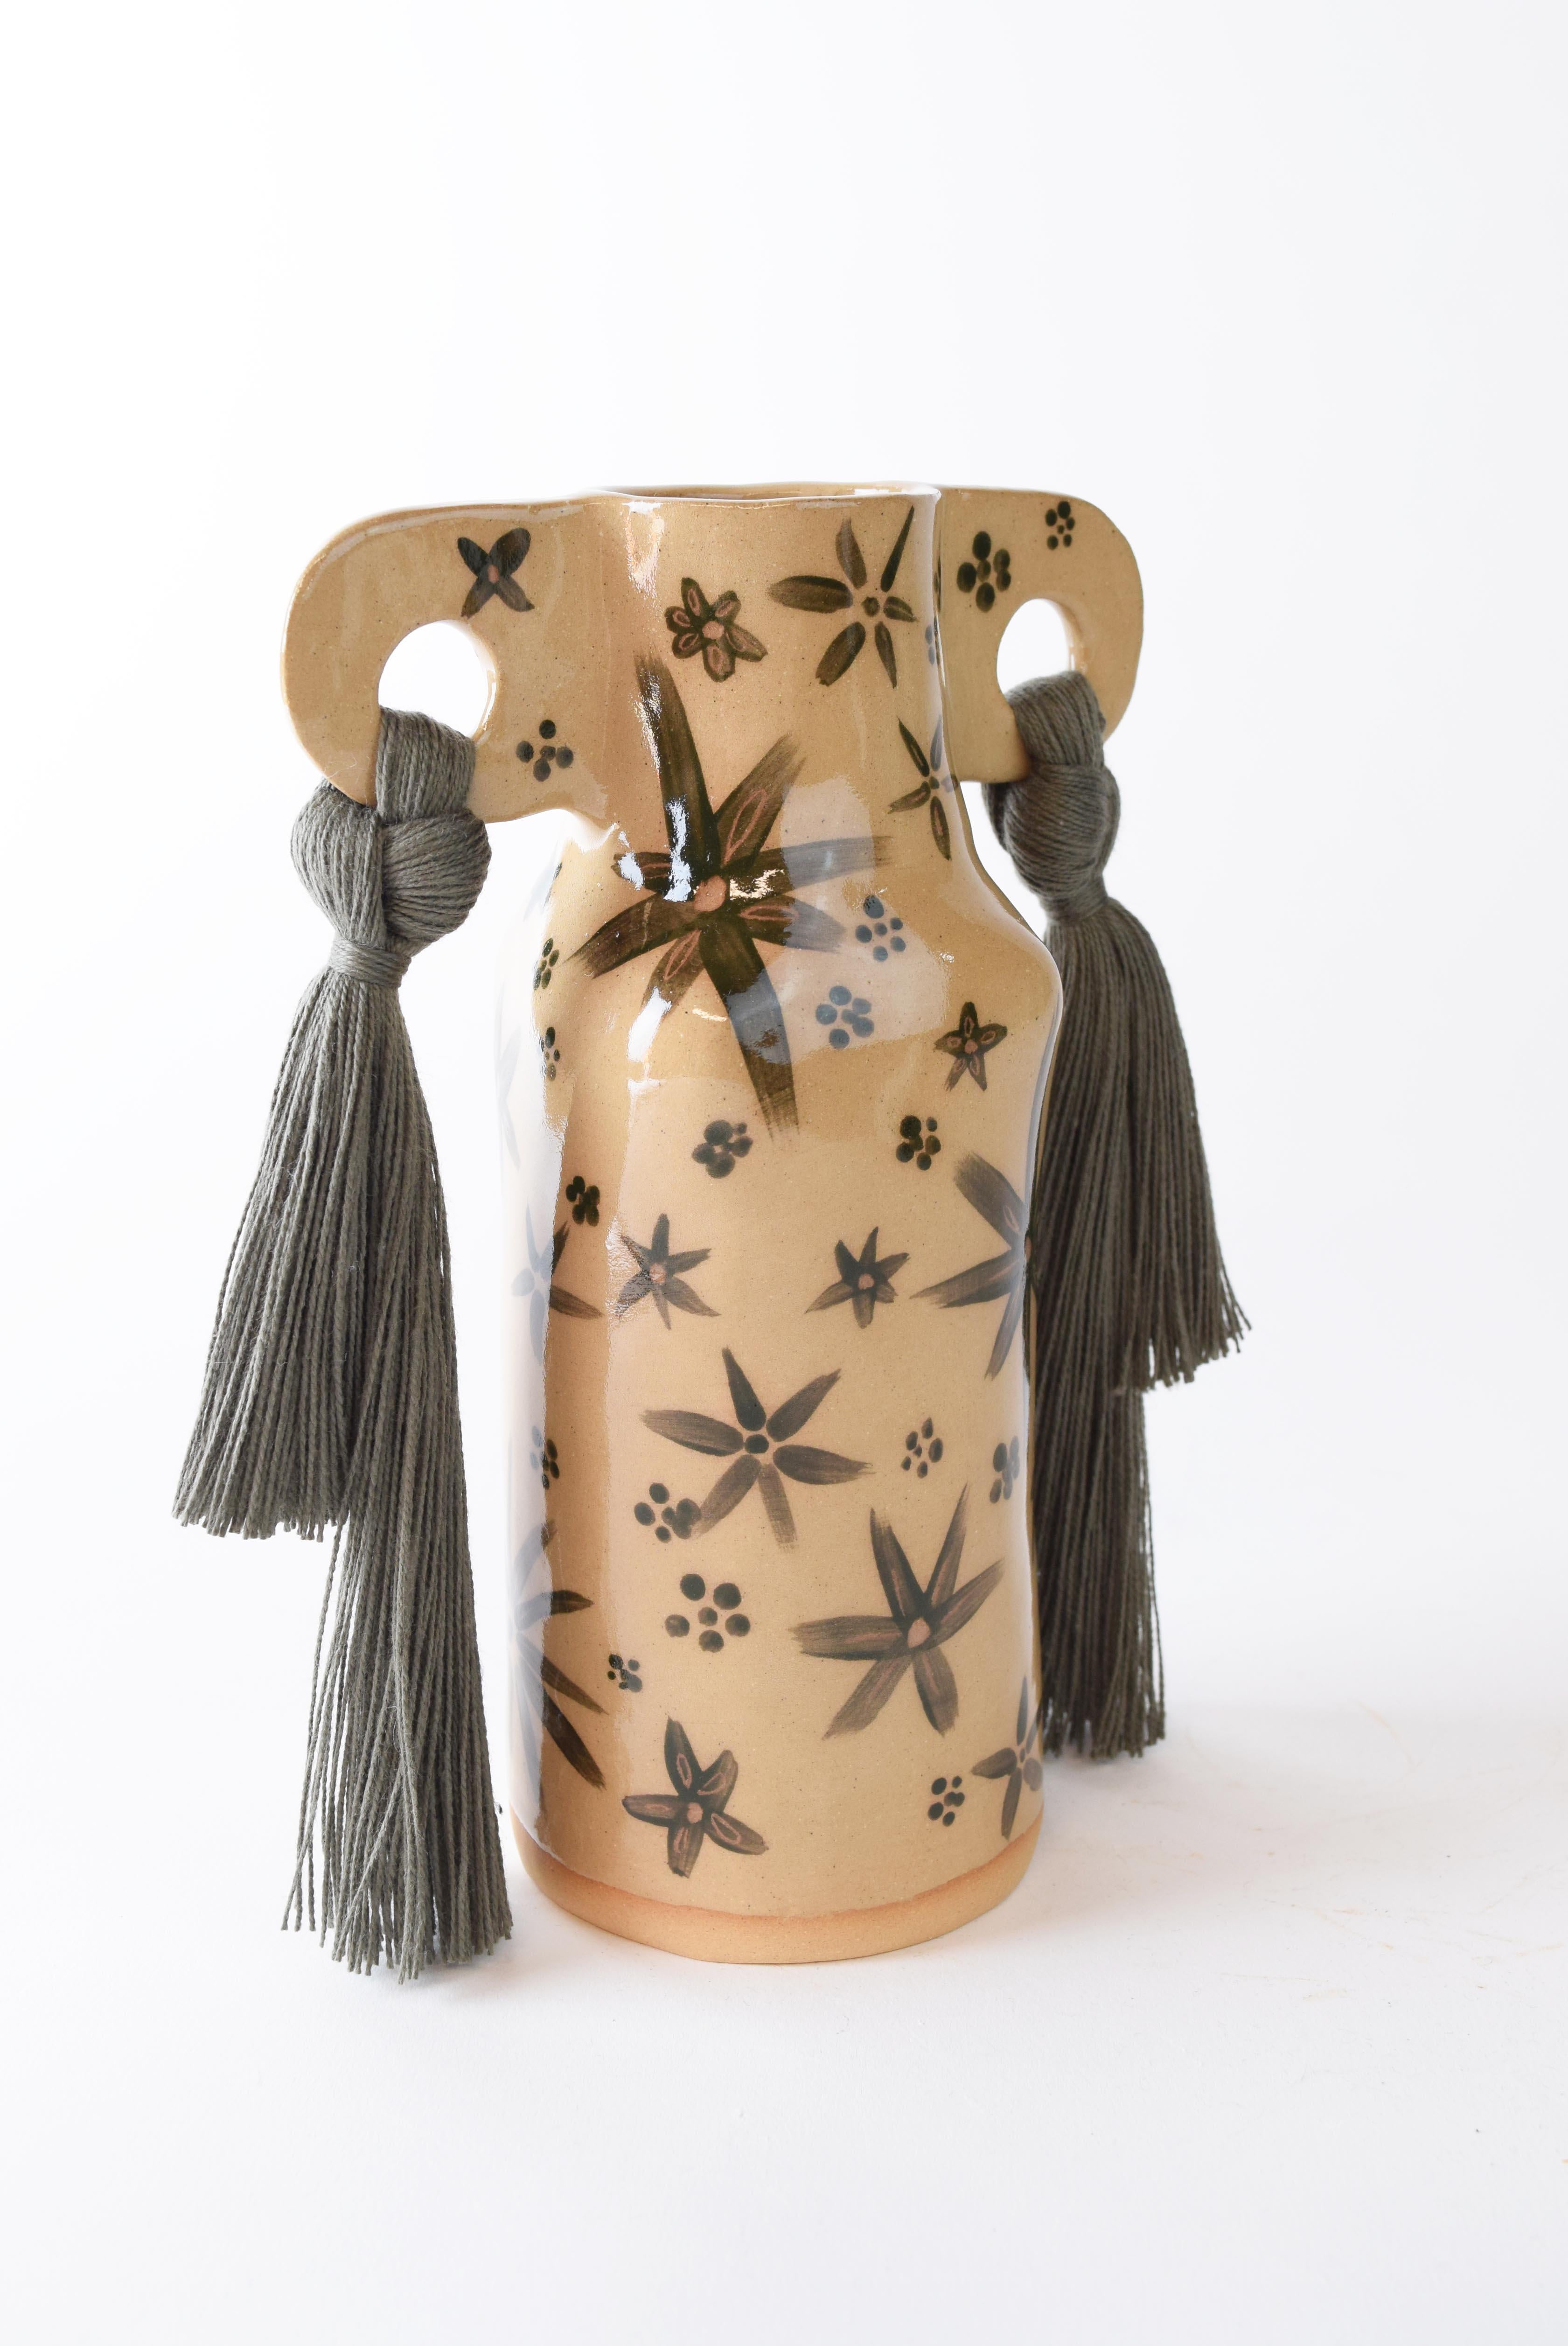 Organic Modern OOAK Handmade Ceramic Vase #606 - Olive Green Hand Glazed Floral & Cotton Braid